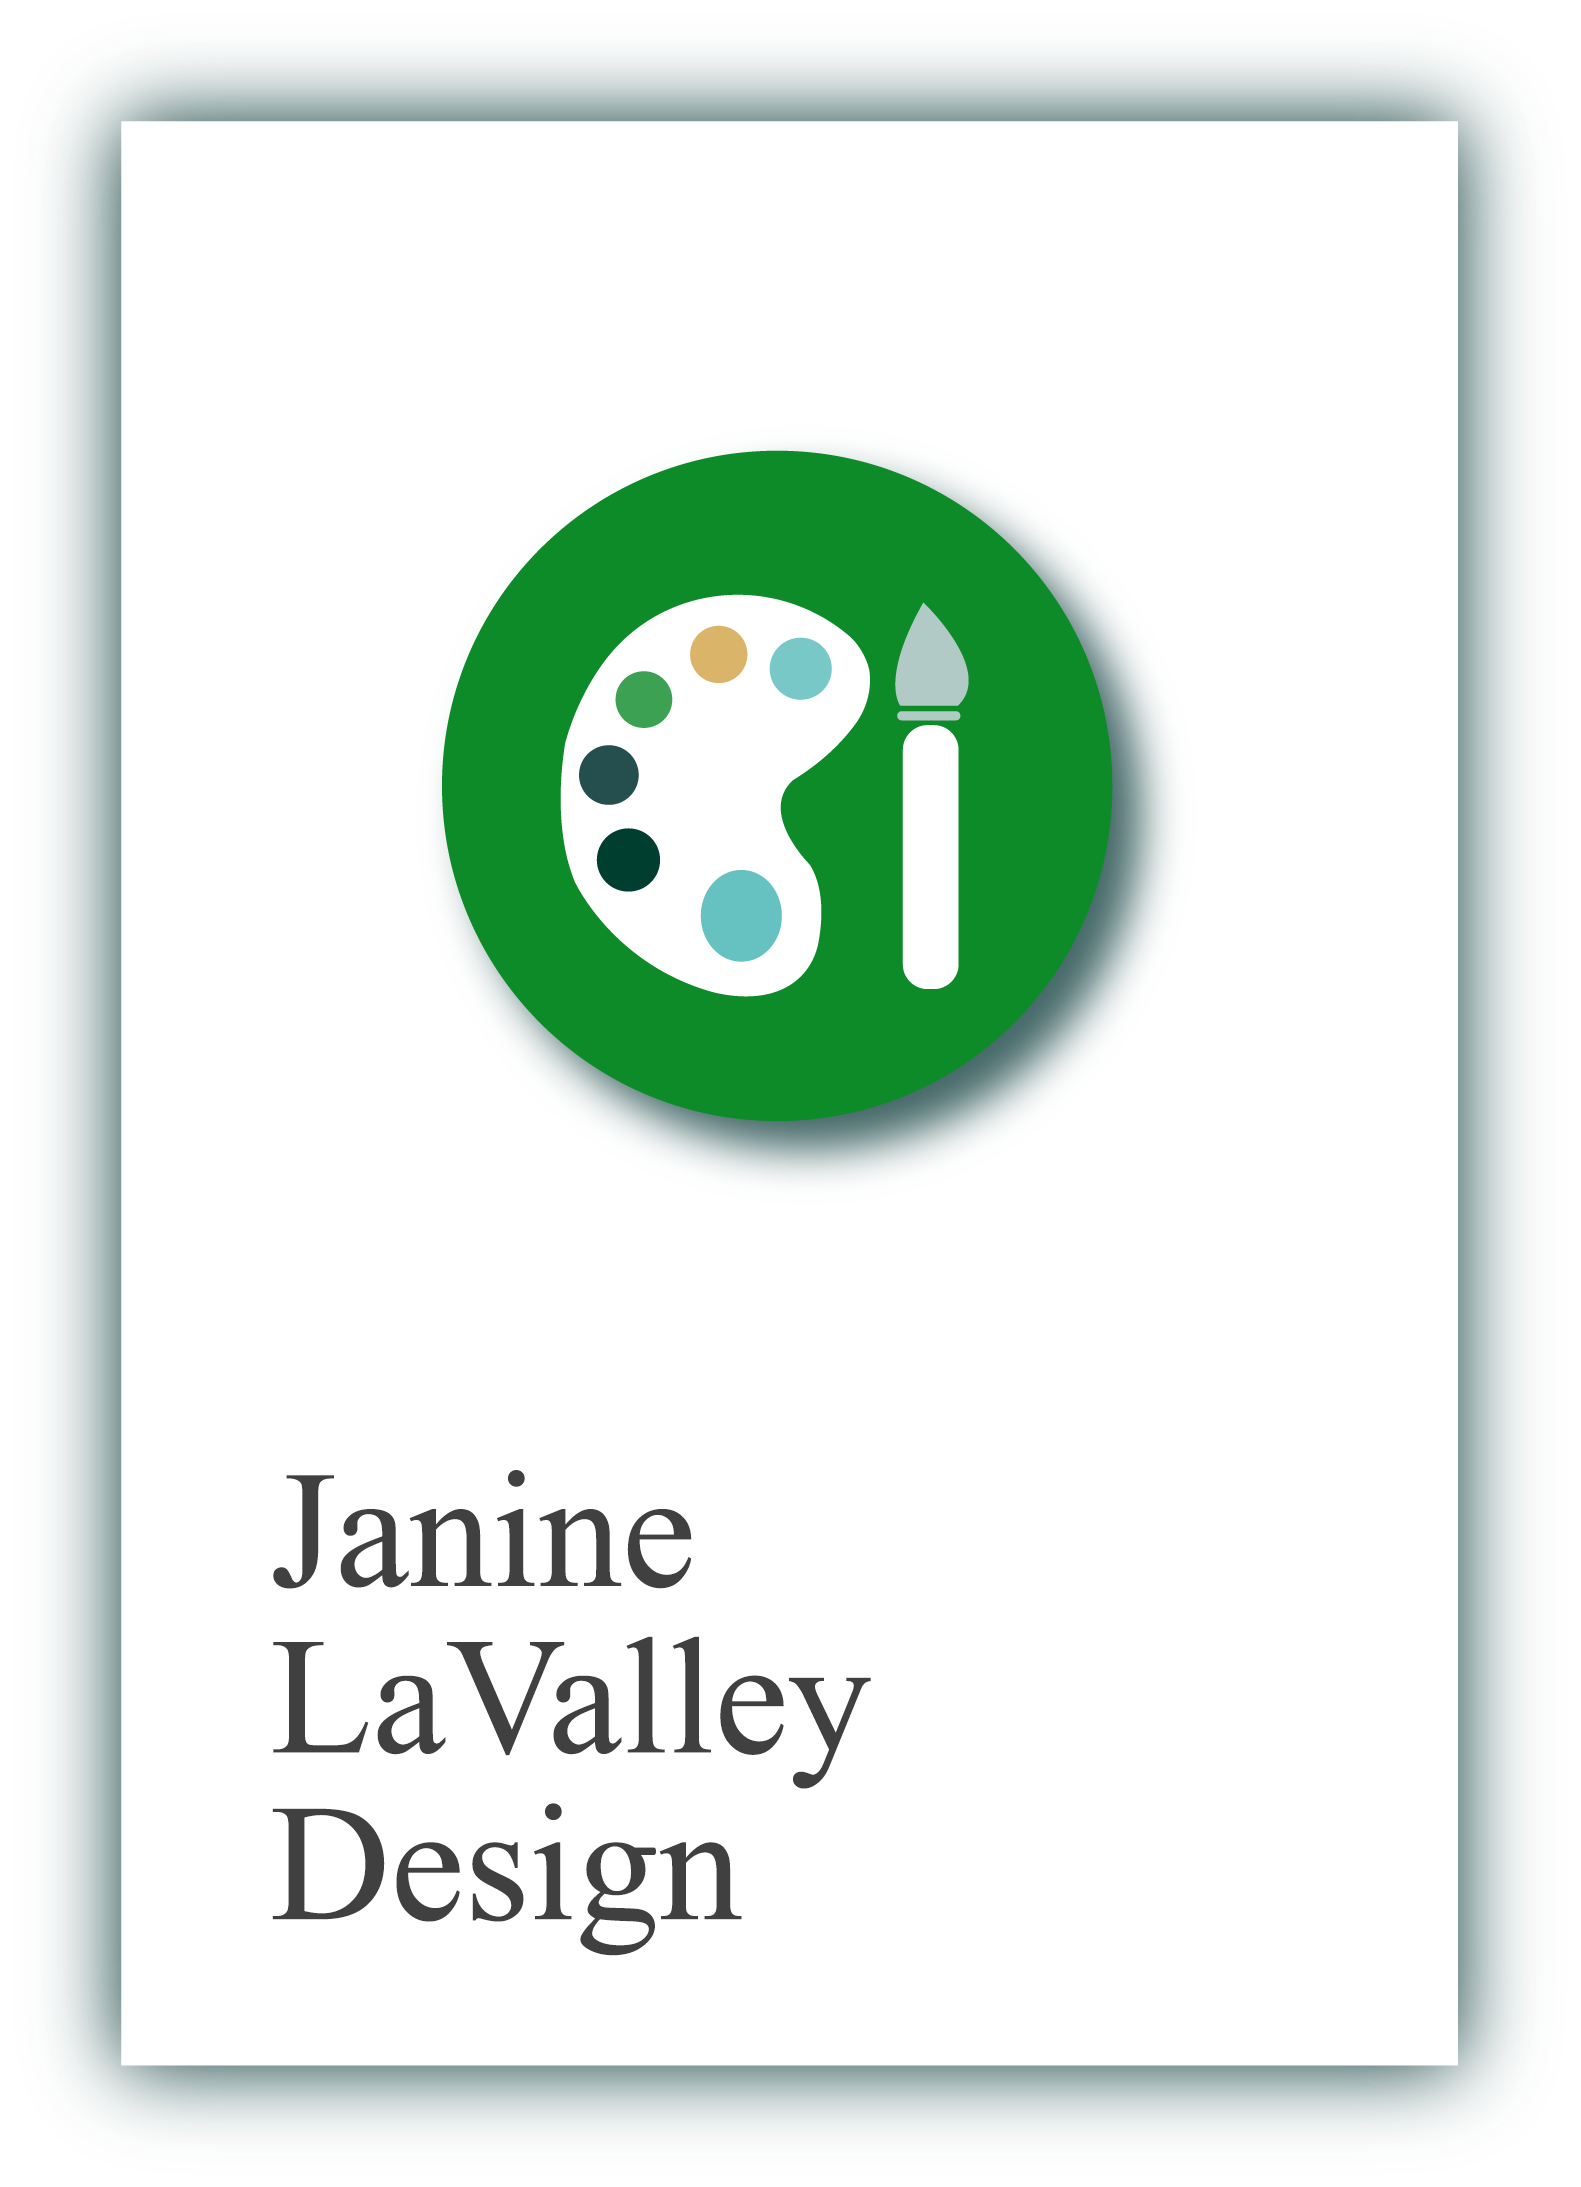 Janine LaValley Design 2